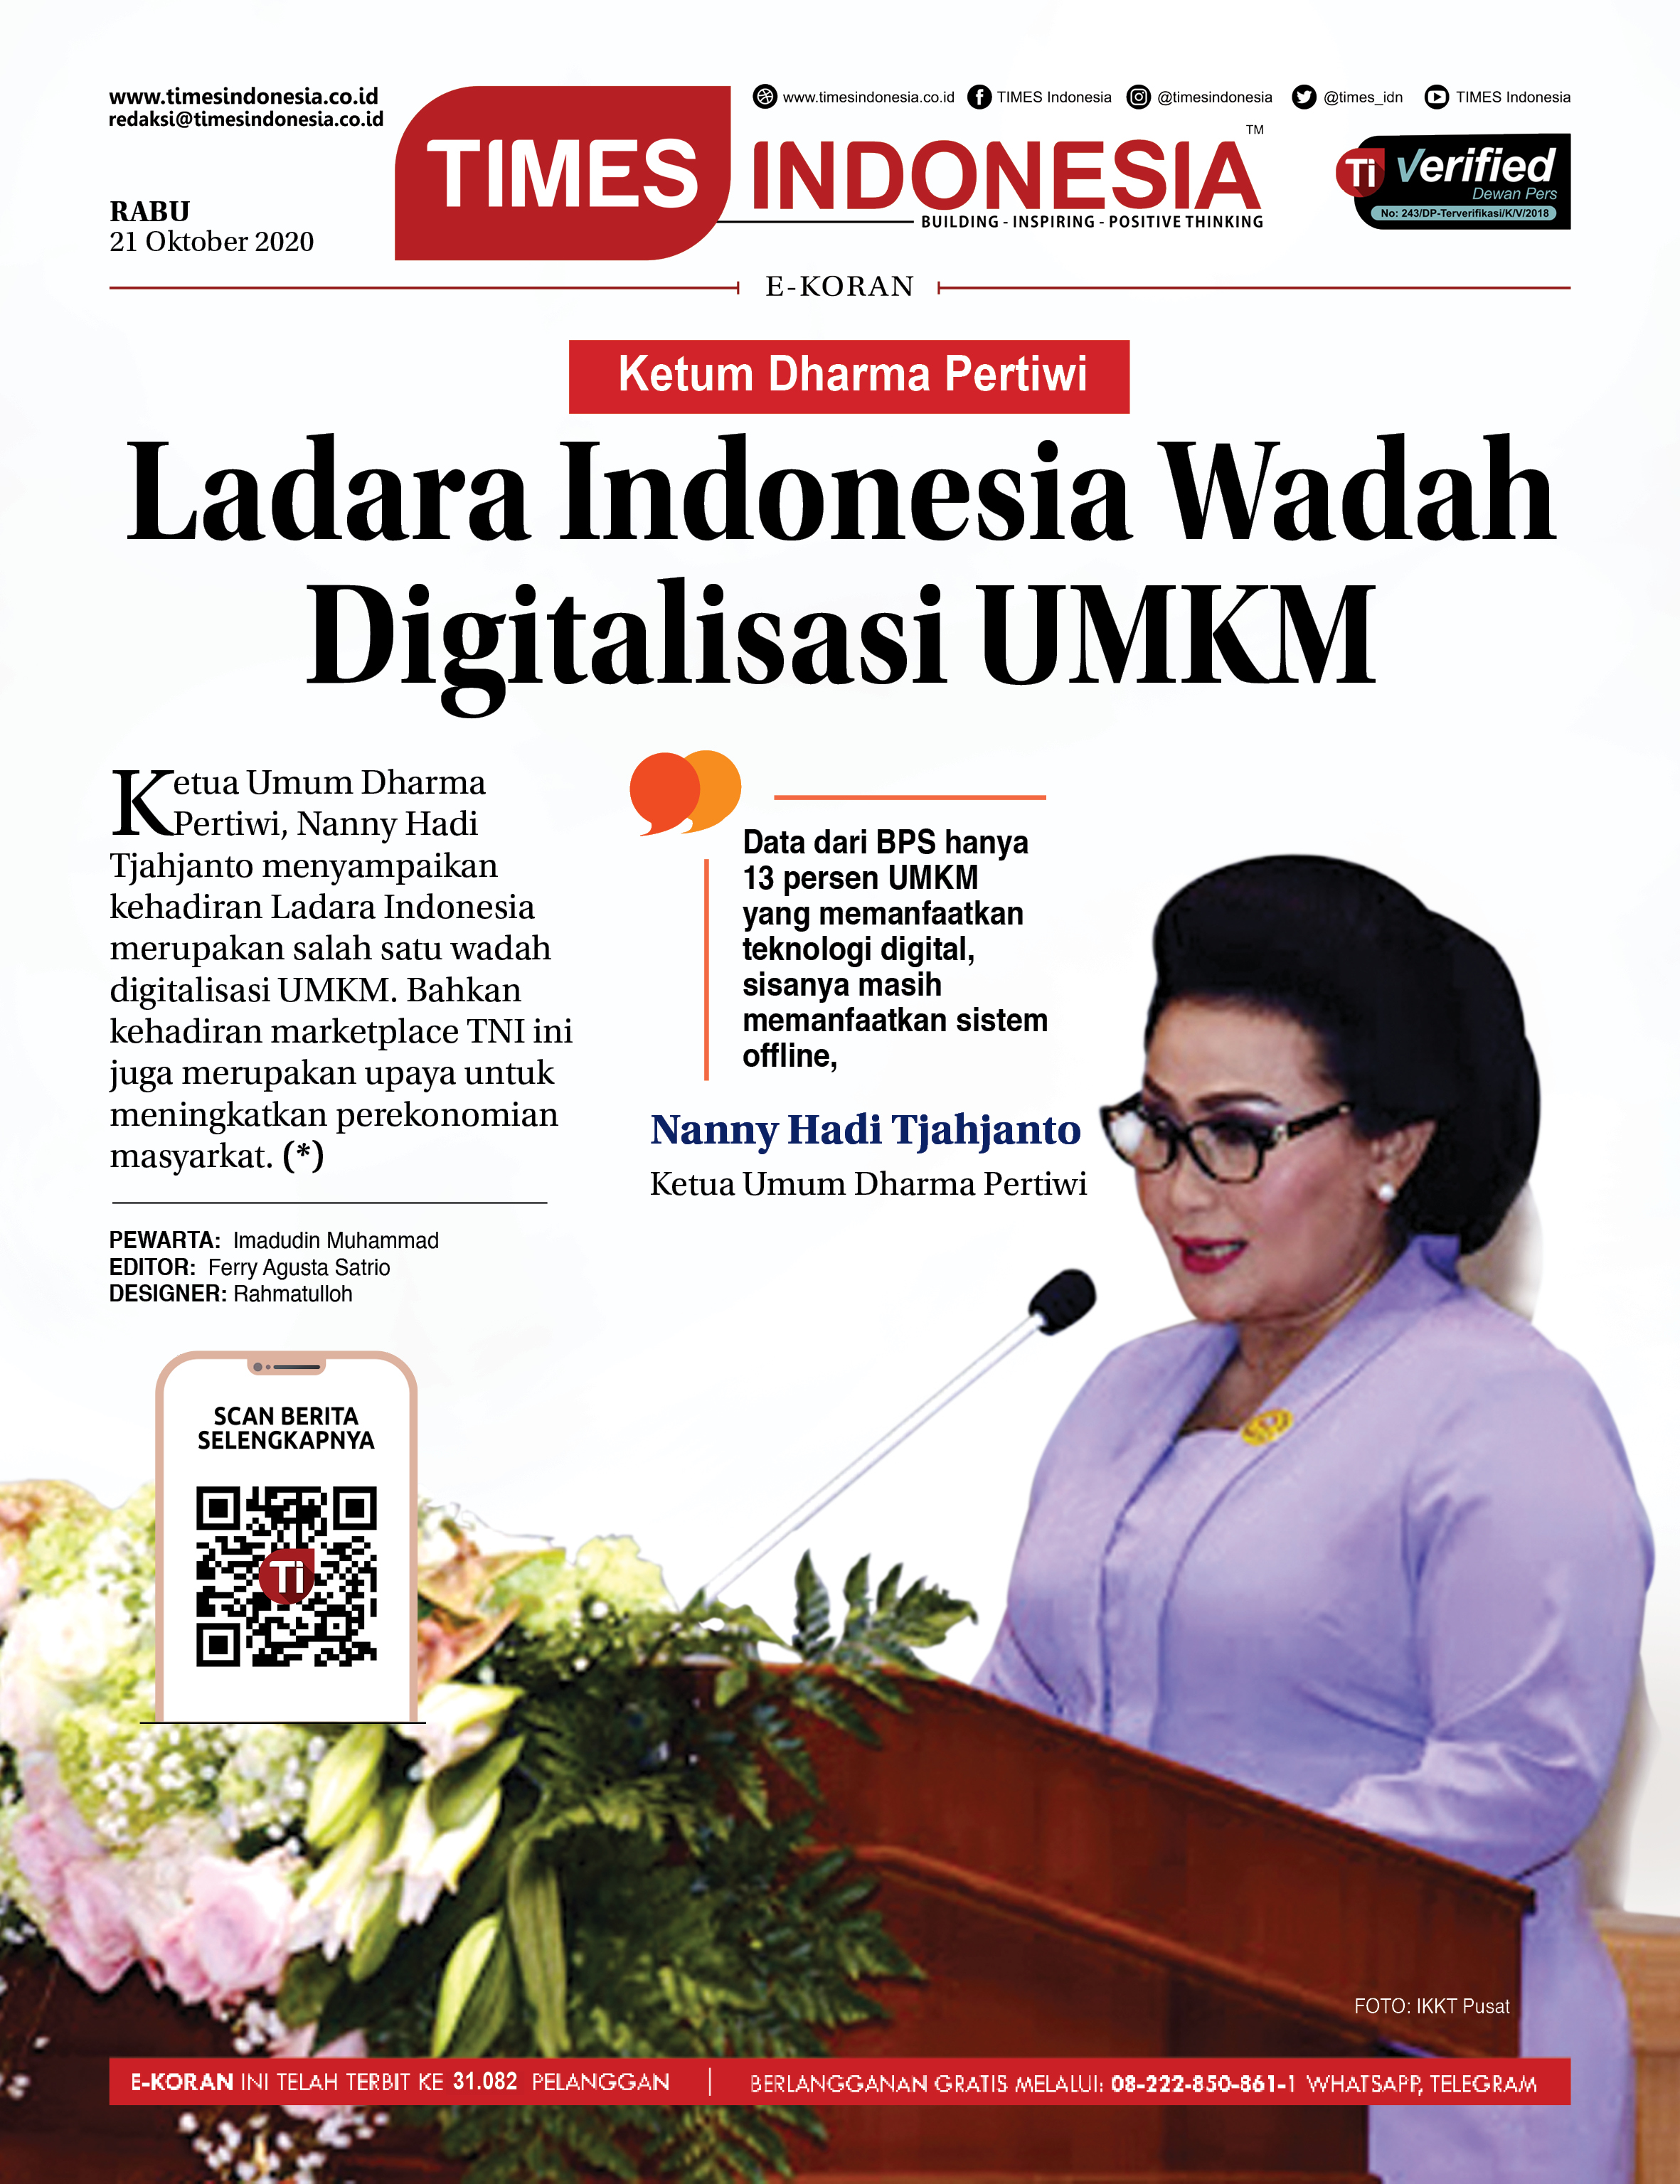 Ekoran-Edisi-Rabu-21-Oktoberr-2020-Ketum-Dharma-Pertiwi-Ladara-Indonesia-Wadah-Digitalisasi-UMKM-Revisi-27e27a9c54e7d6e54.jpg